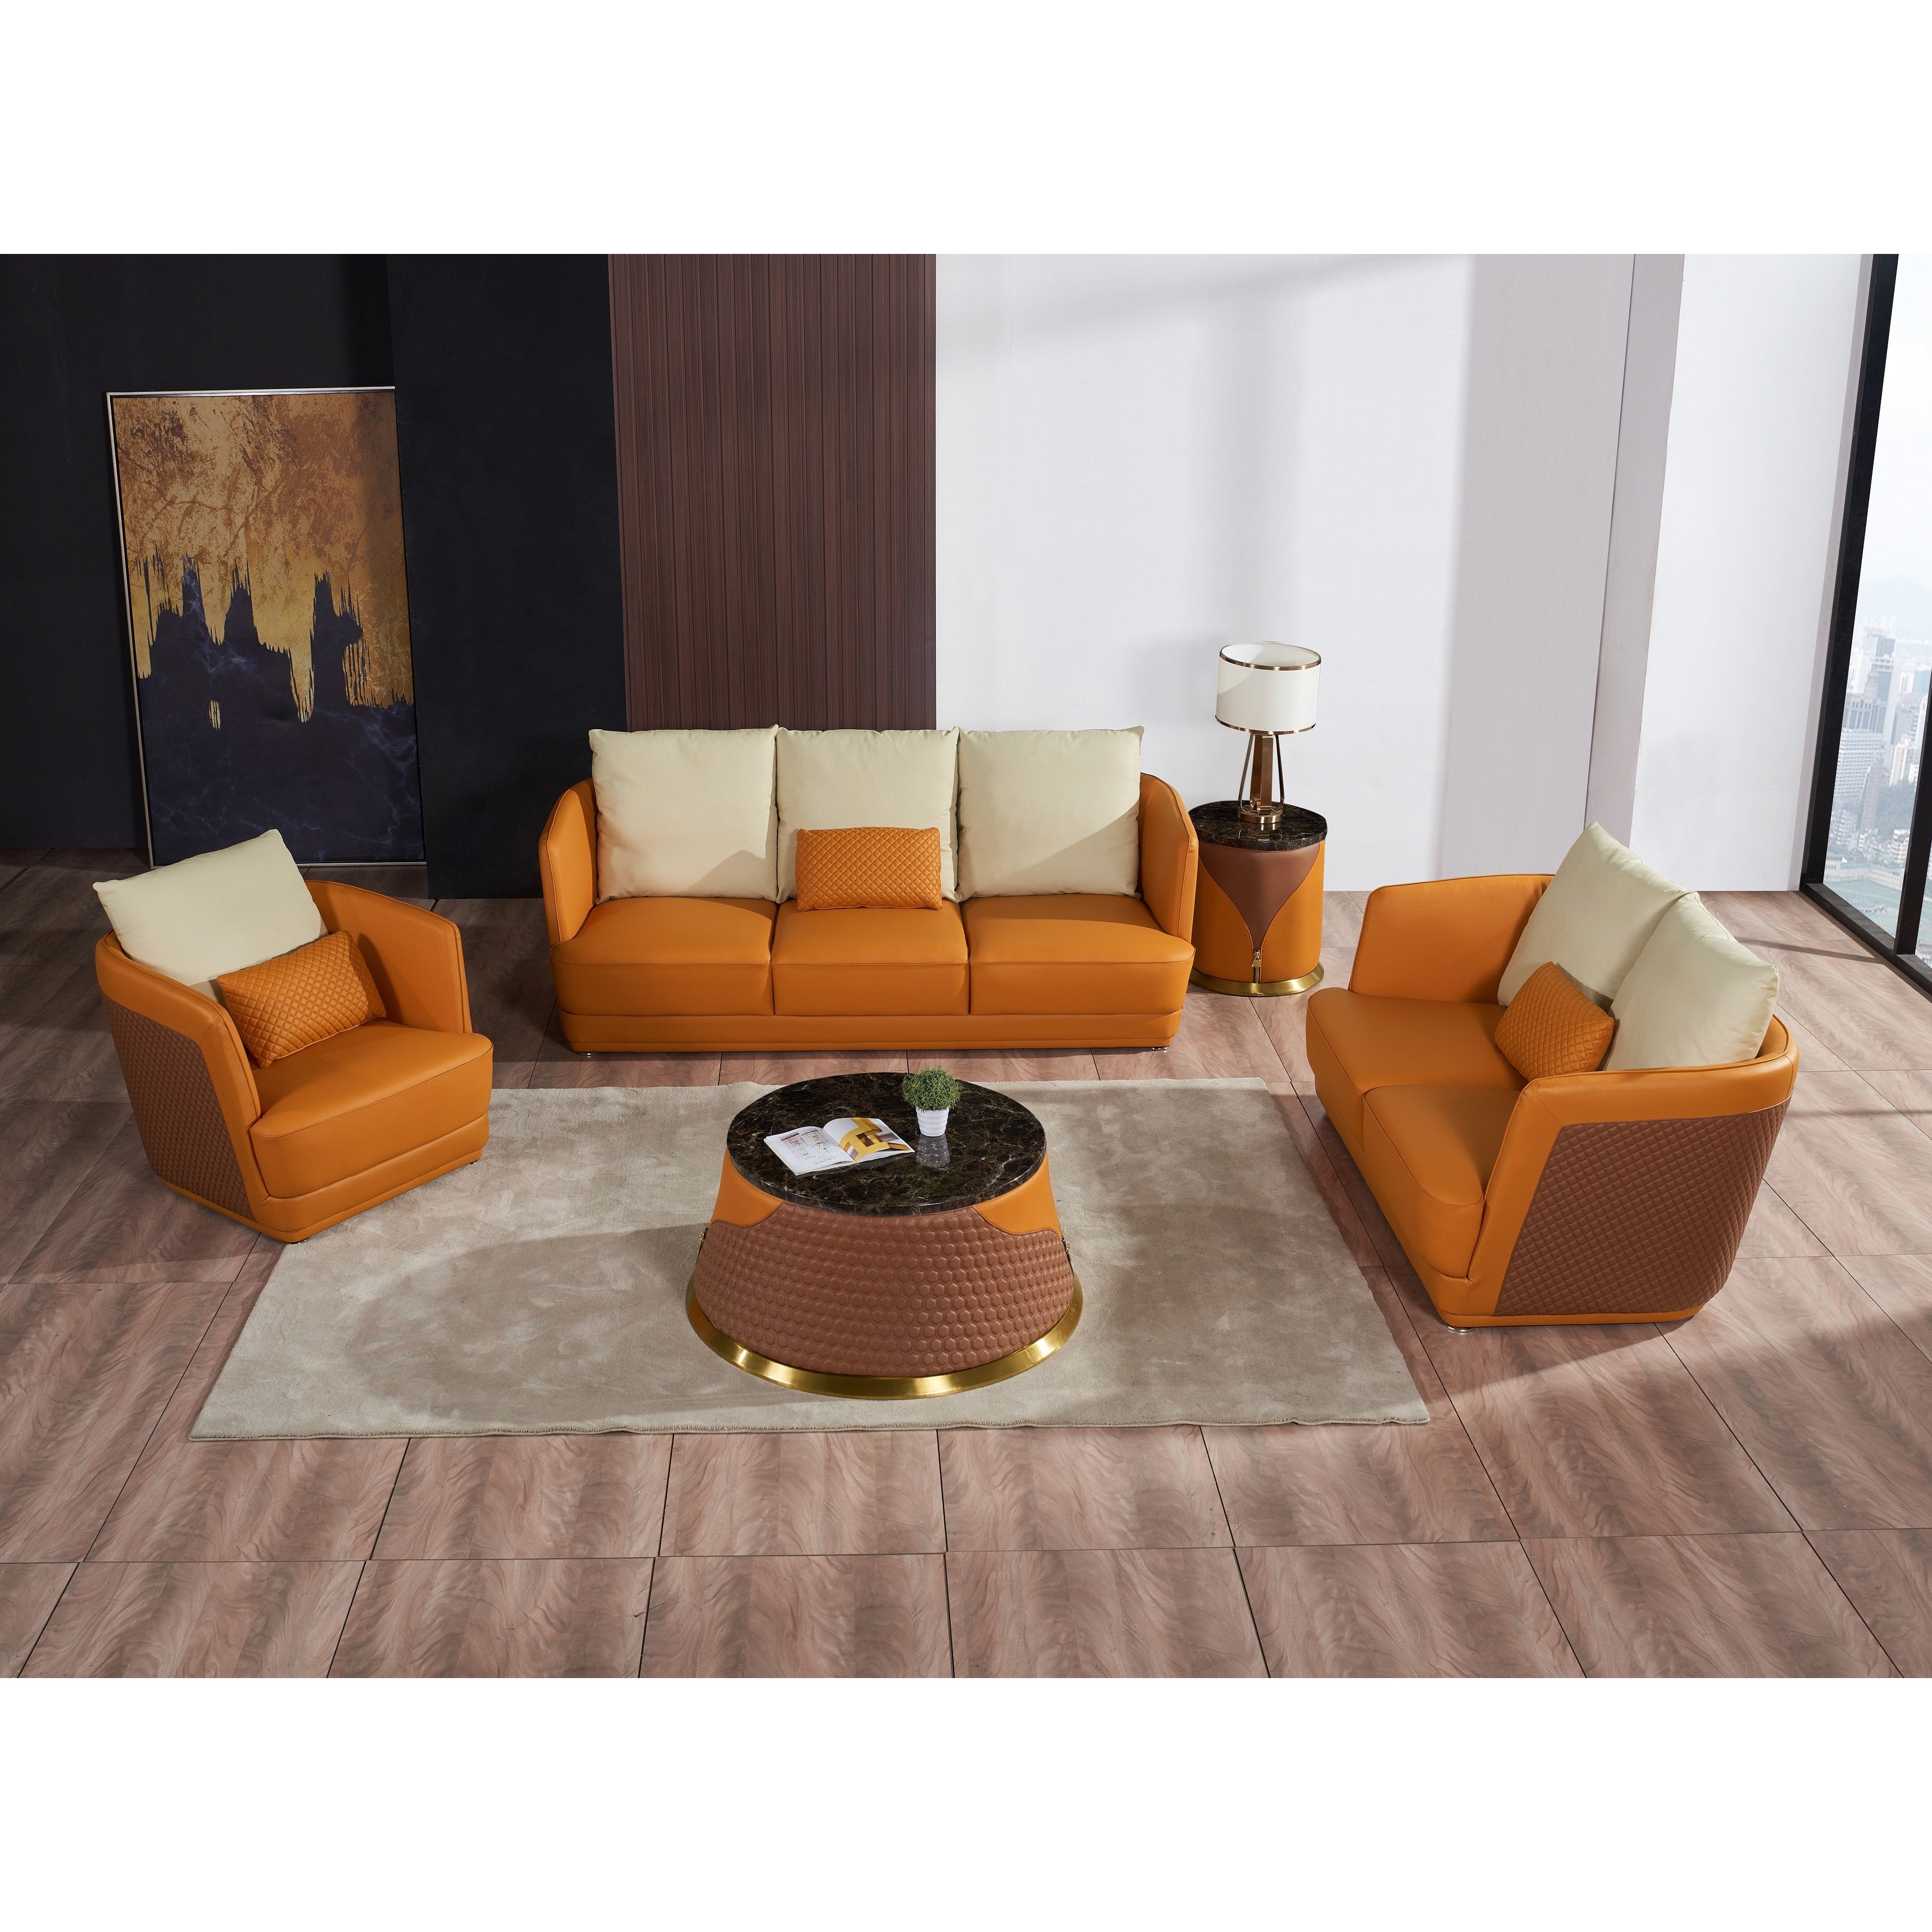 European Furniture - Glamour 3 Piece Sofa Set Orange & Brown Italian Leather - EF-51619 - New Star Living